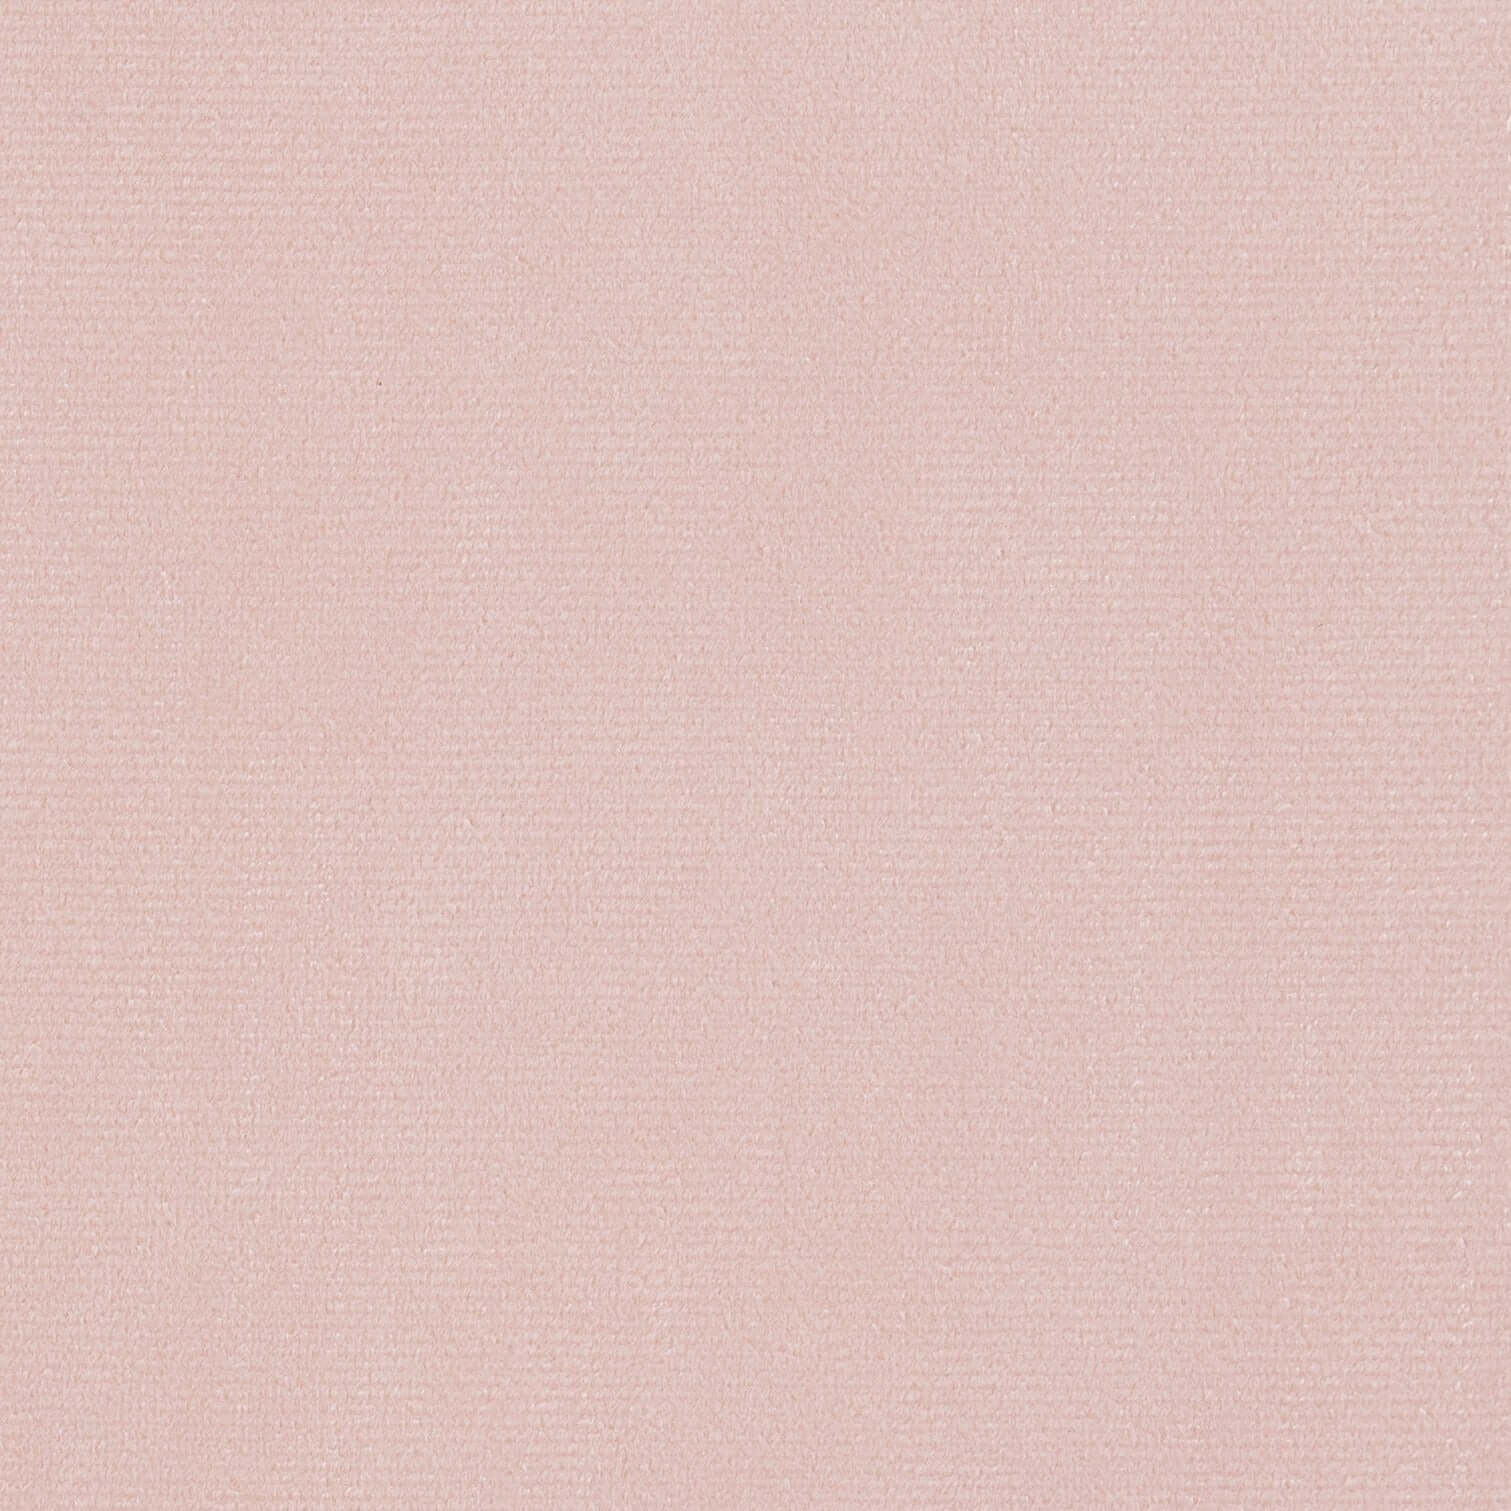 Amelia Storage Ottoman Pink Velvet Fabric- The Right Buy Store